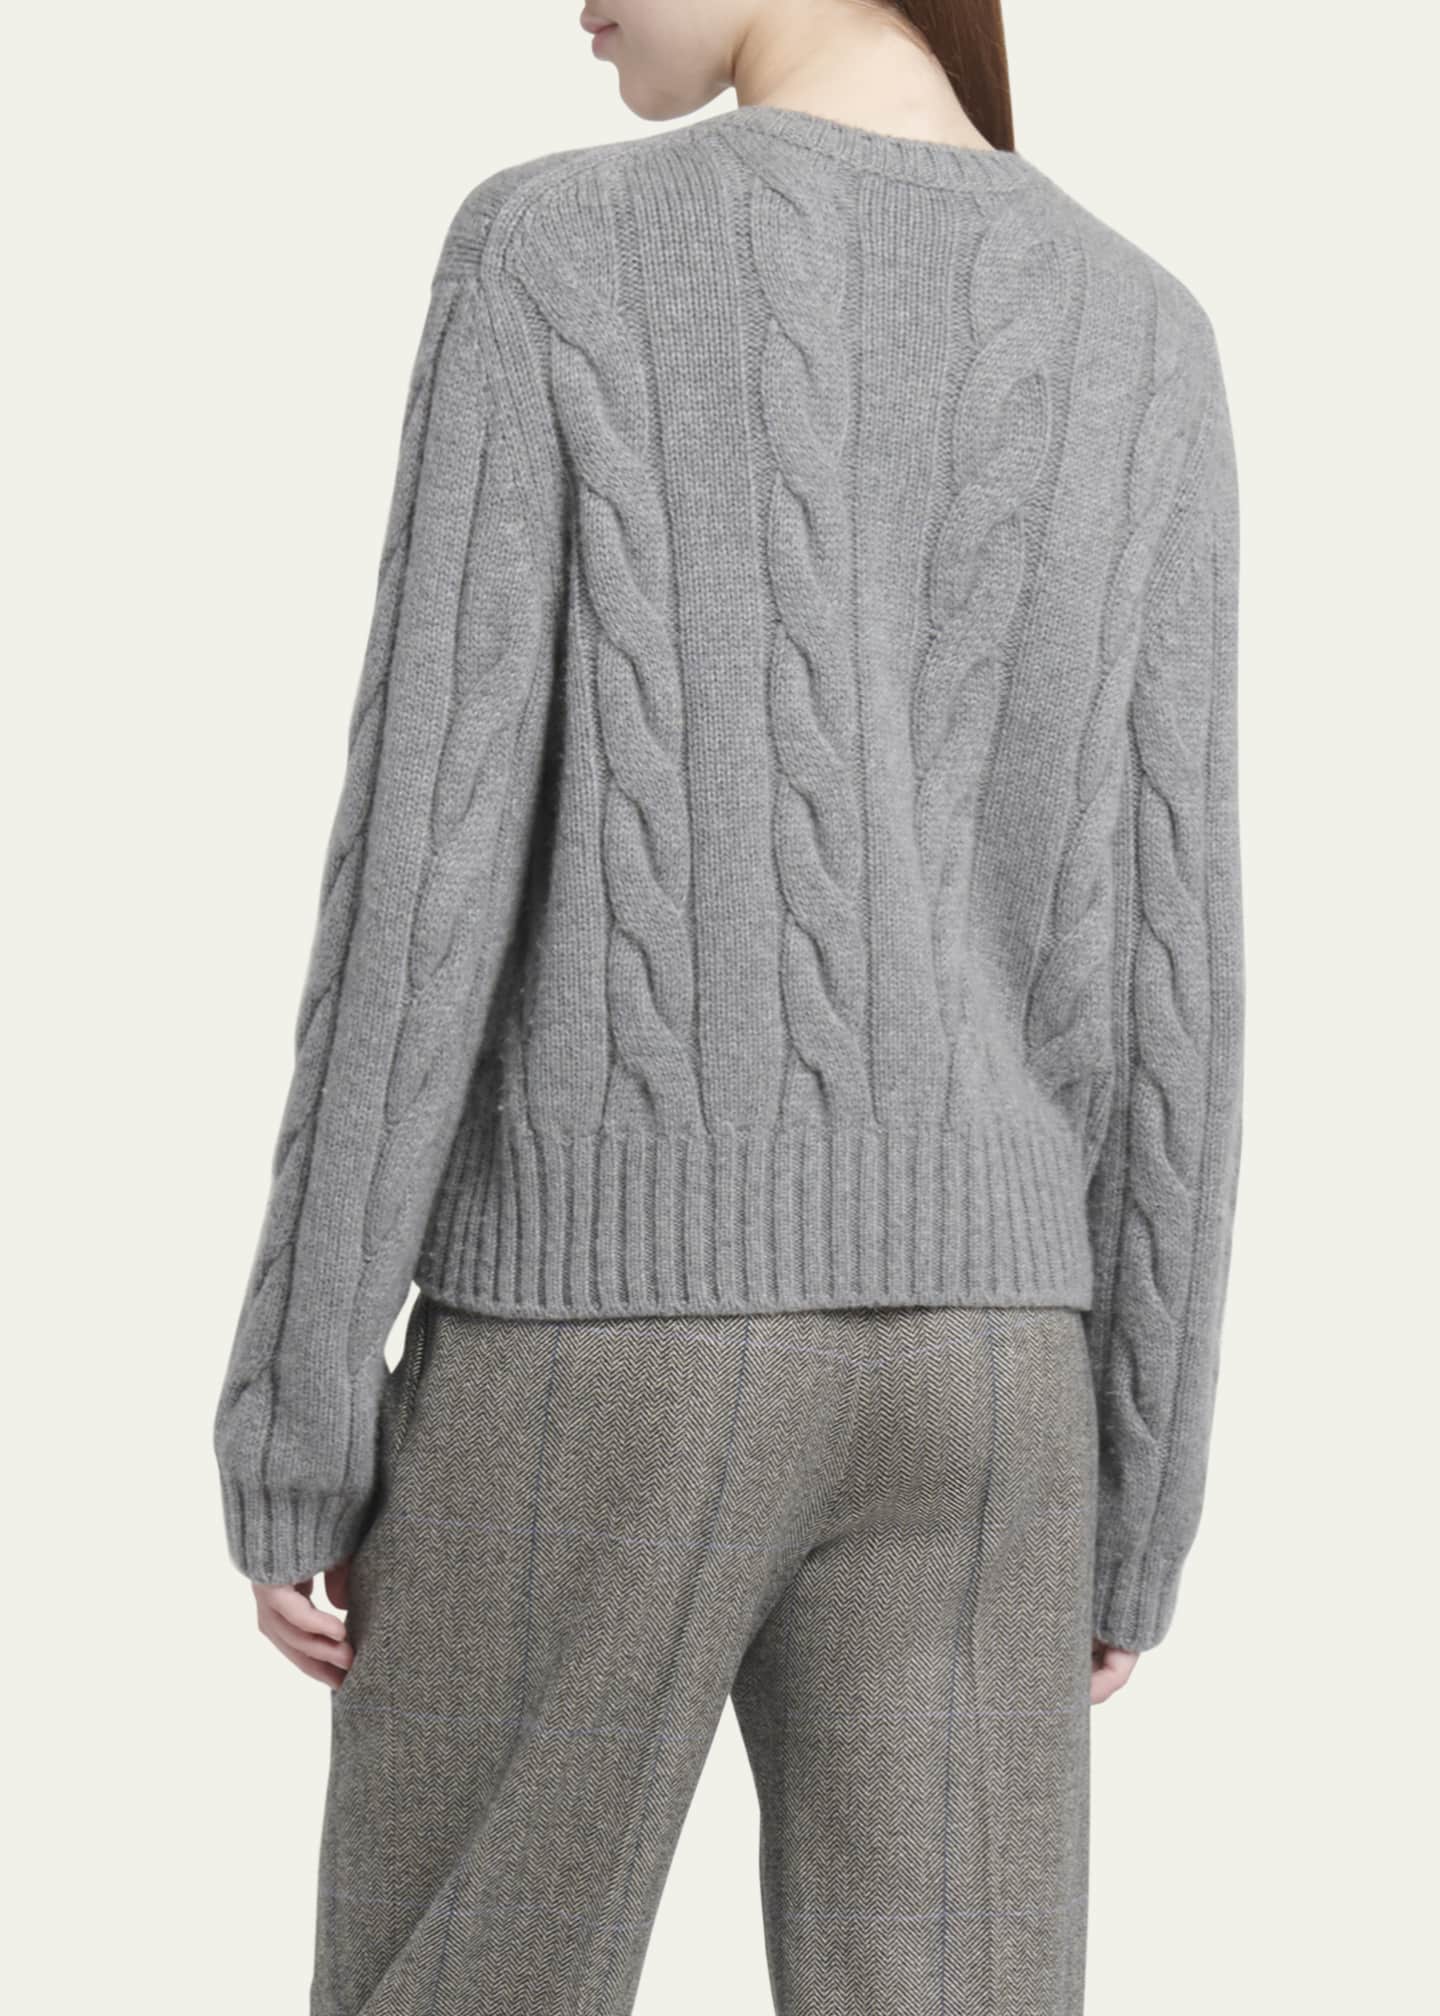 Loro Piana Napier Cashmere Cable-Knit Sweater - Bergdorf Goodman